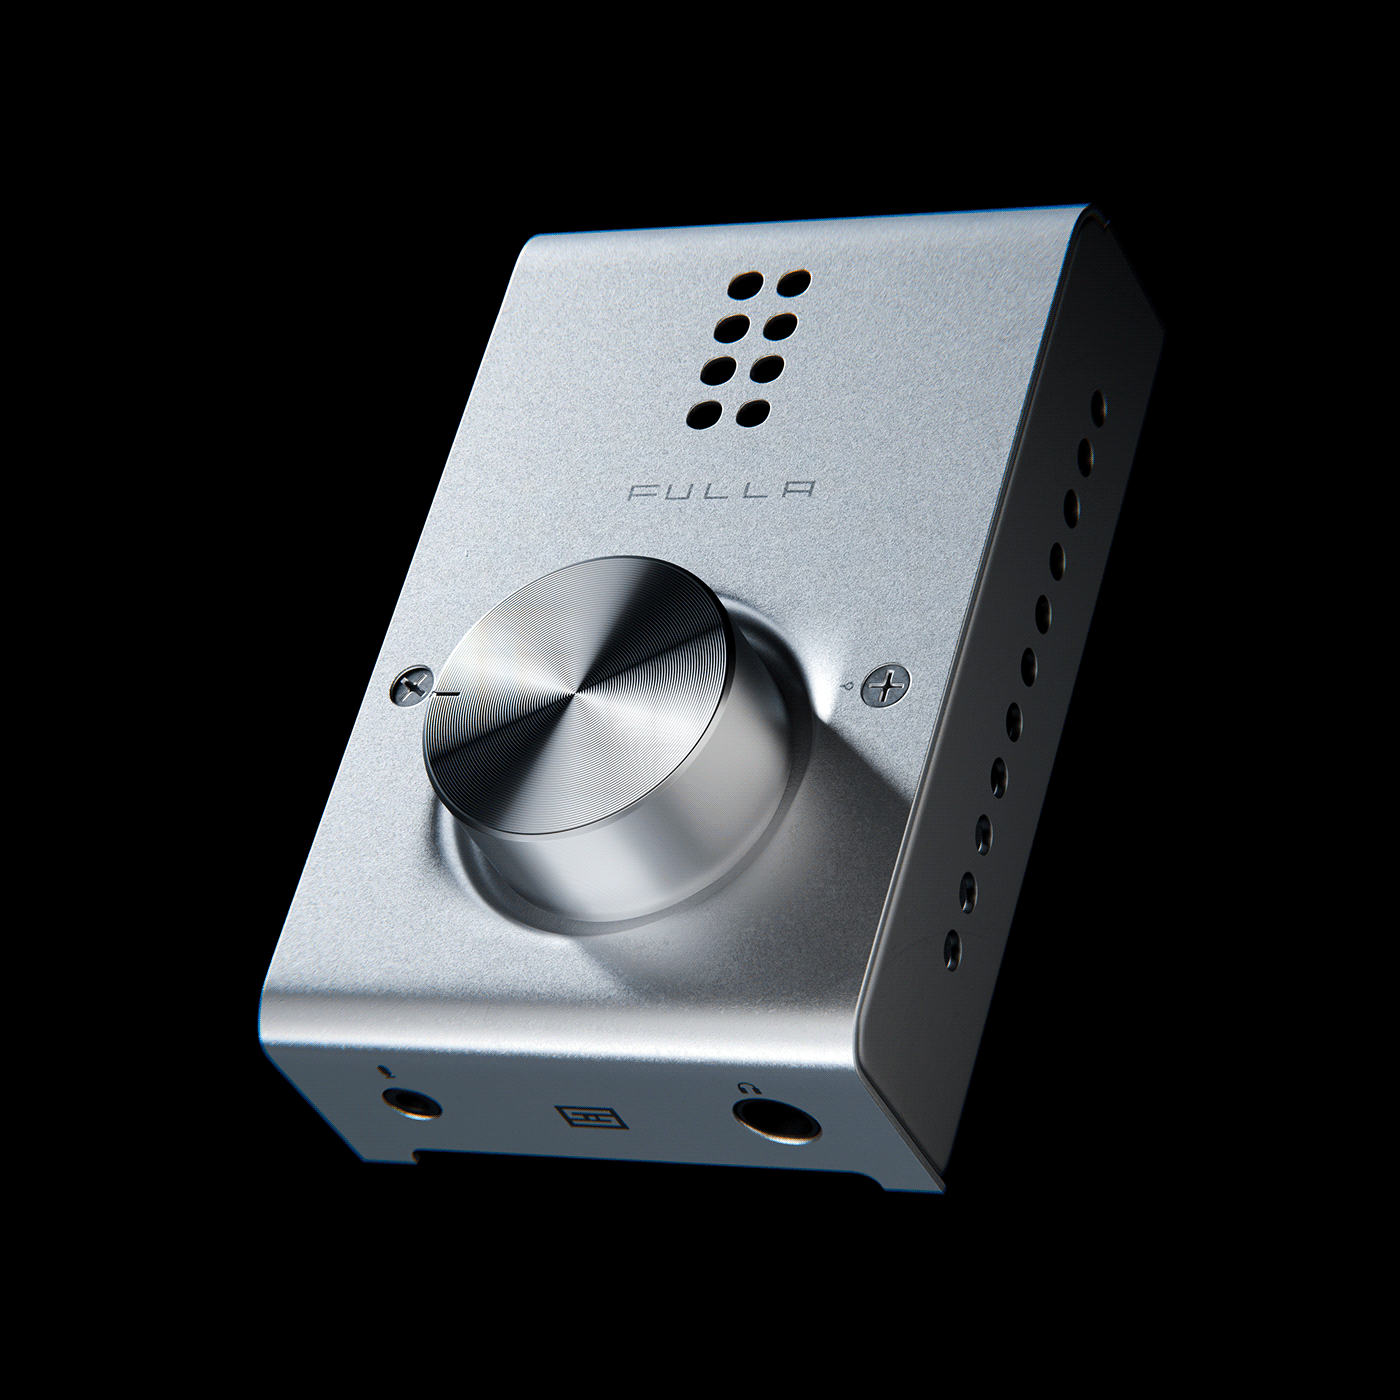 Schiit Fulla E silver DAC combo, stunning CGI render, elegantly floating on black background